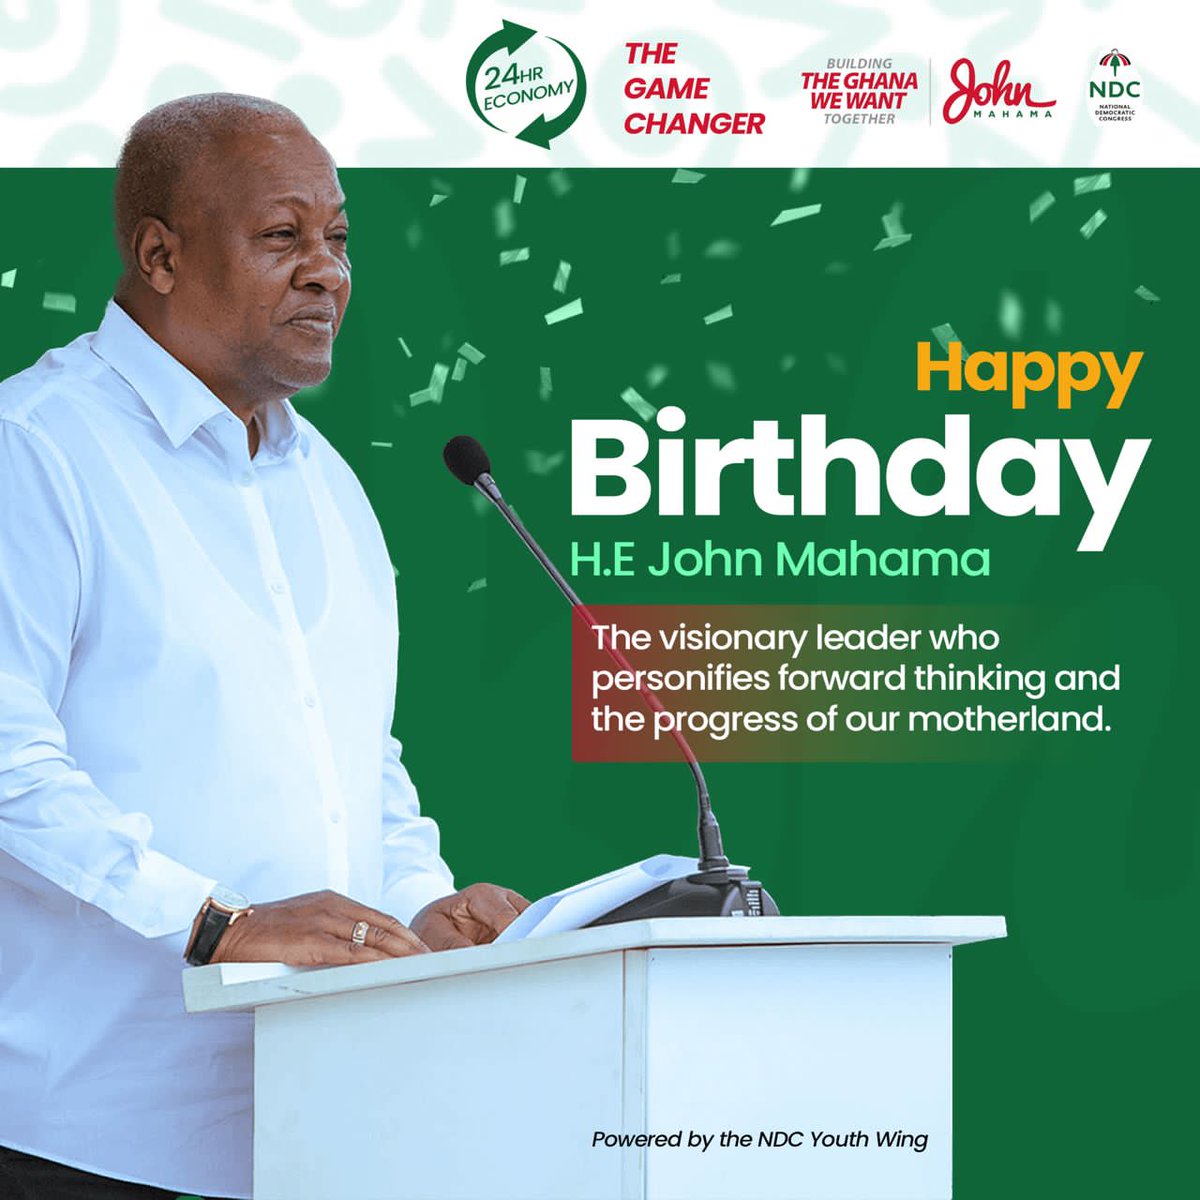 Happy Birthday Visionary H. E John Mahama.
#TheGameChanger 
#TeinNDC